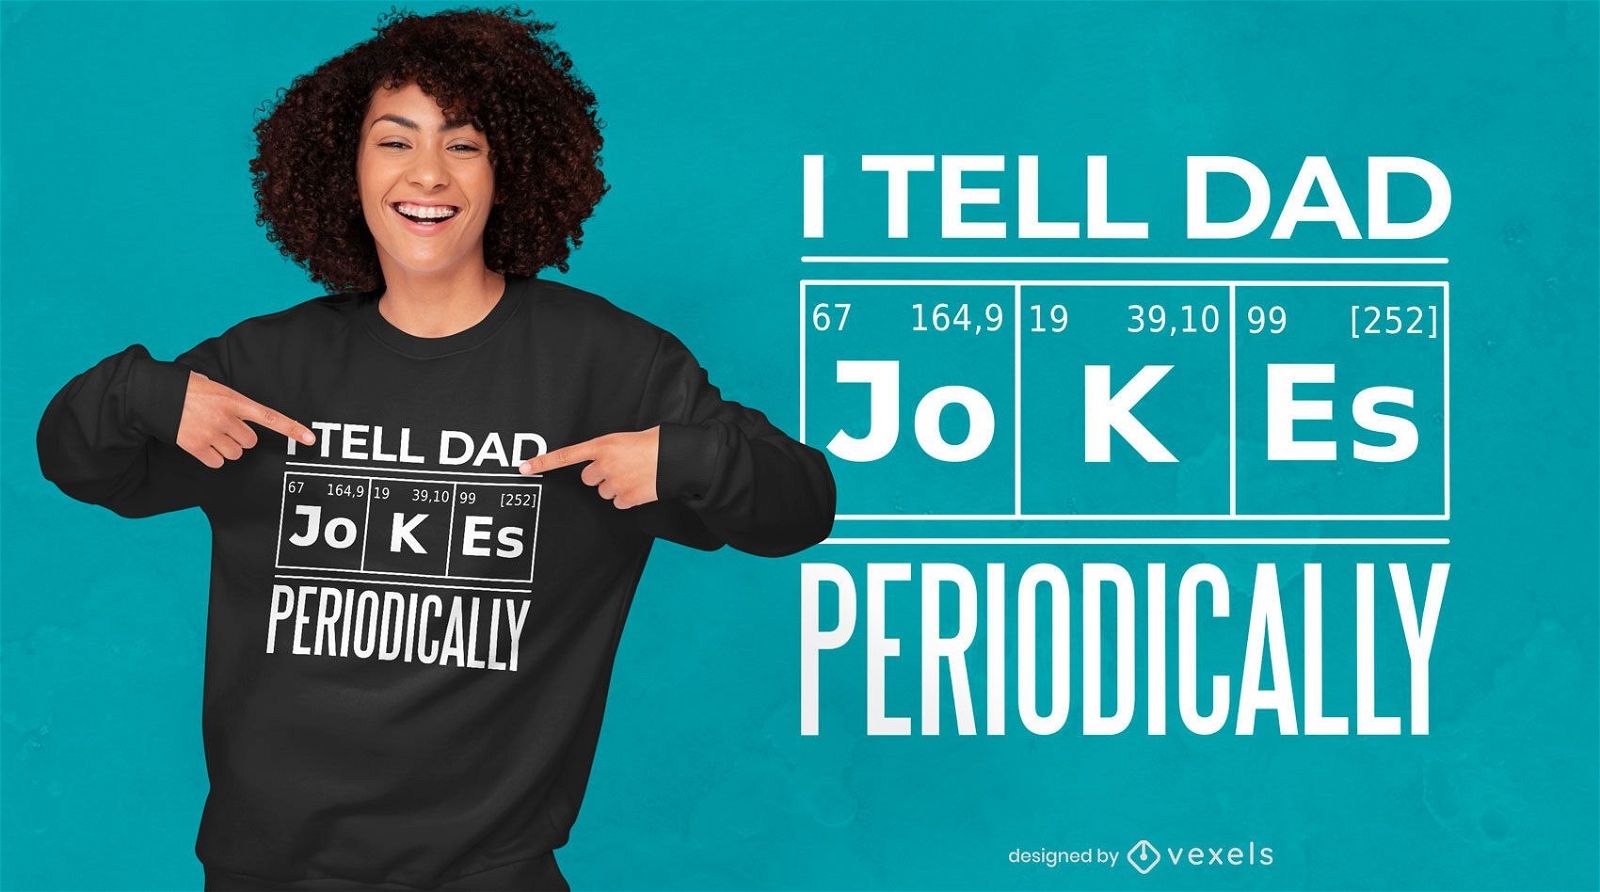 Periodic table dad jokes t-shirt design